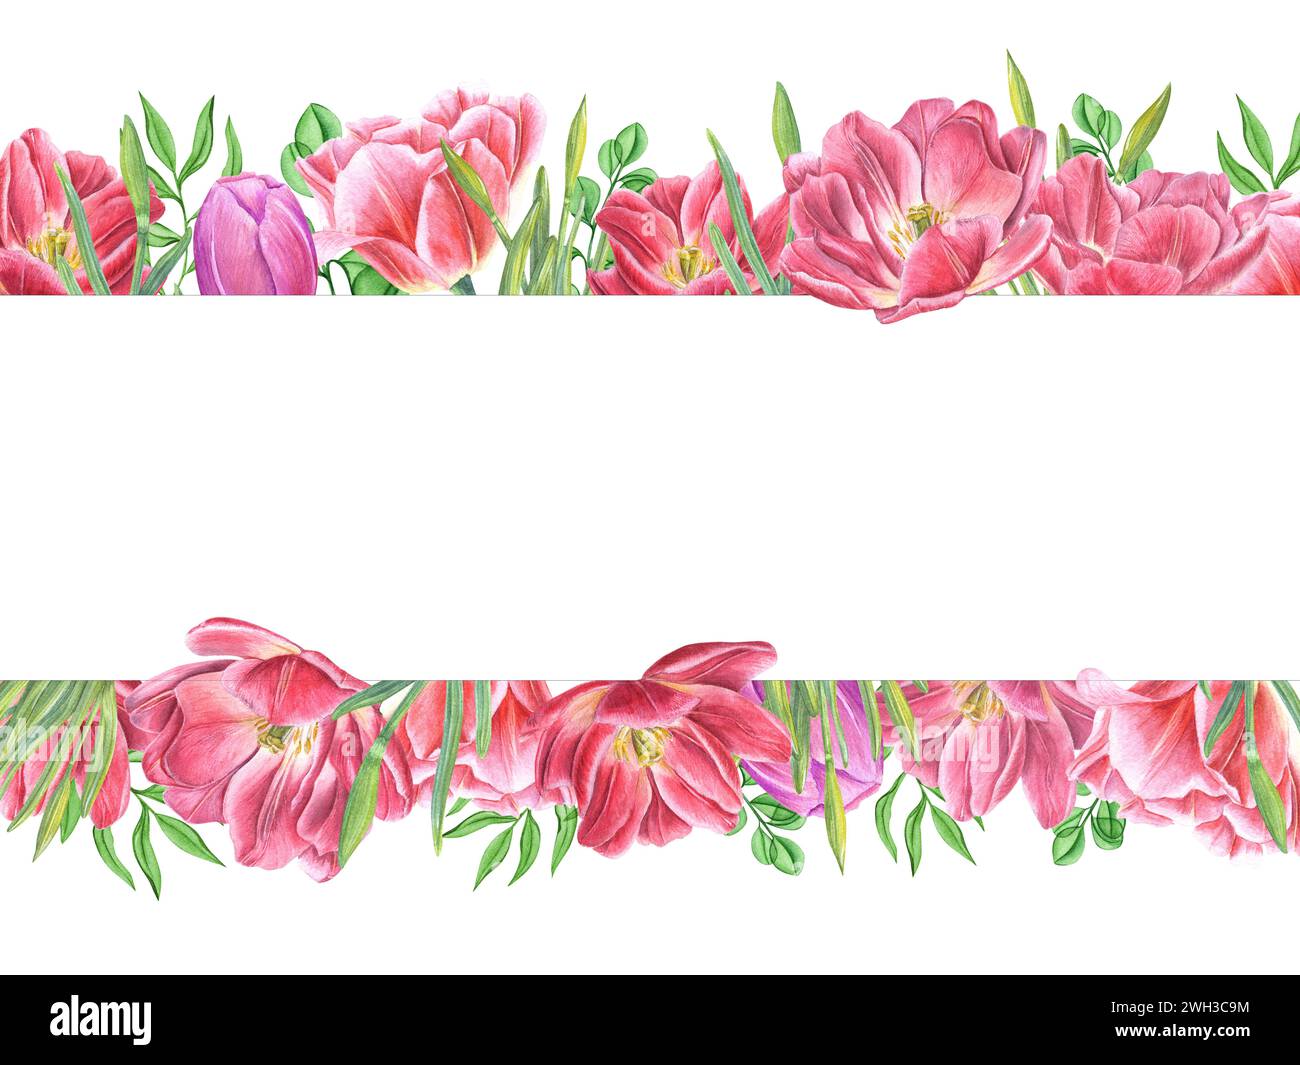 Doppelte rosa Tulpen, Narzissen Knospen mit Grün. Horizontaler Rahmen mit Textraum. Frühlingsblumen, Blätter. Aquarellillustration für Einladung Stockfoto